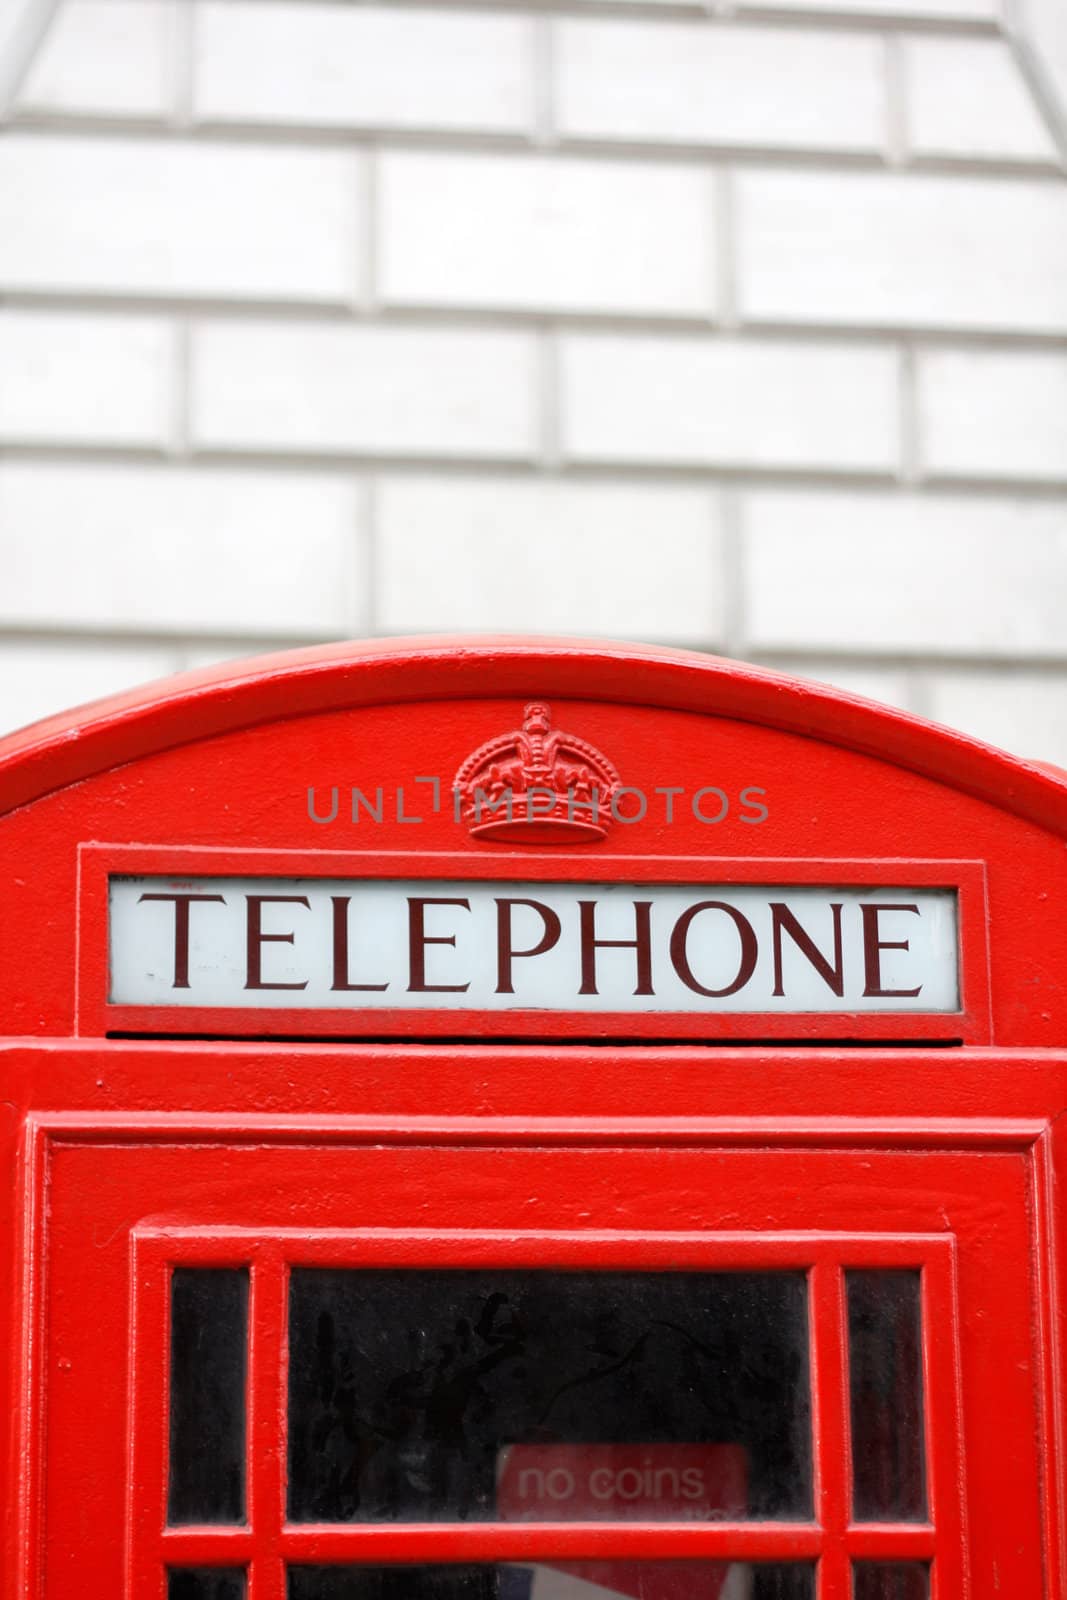 Ac iconic London phone box